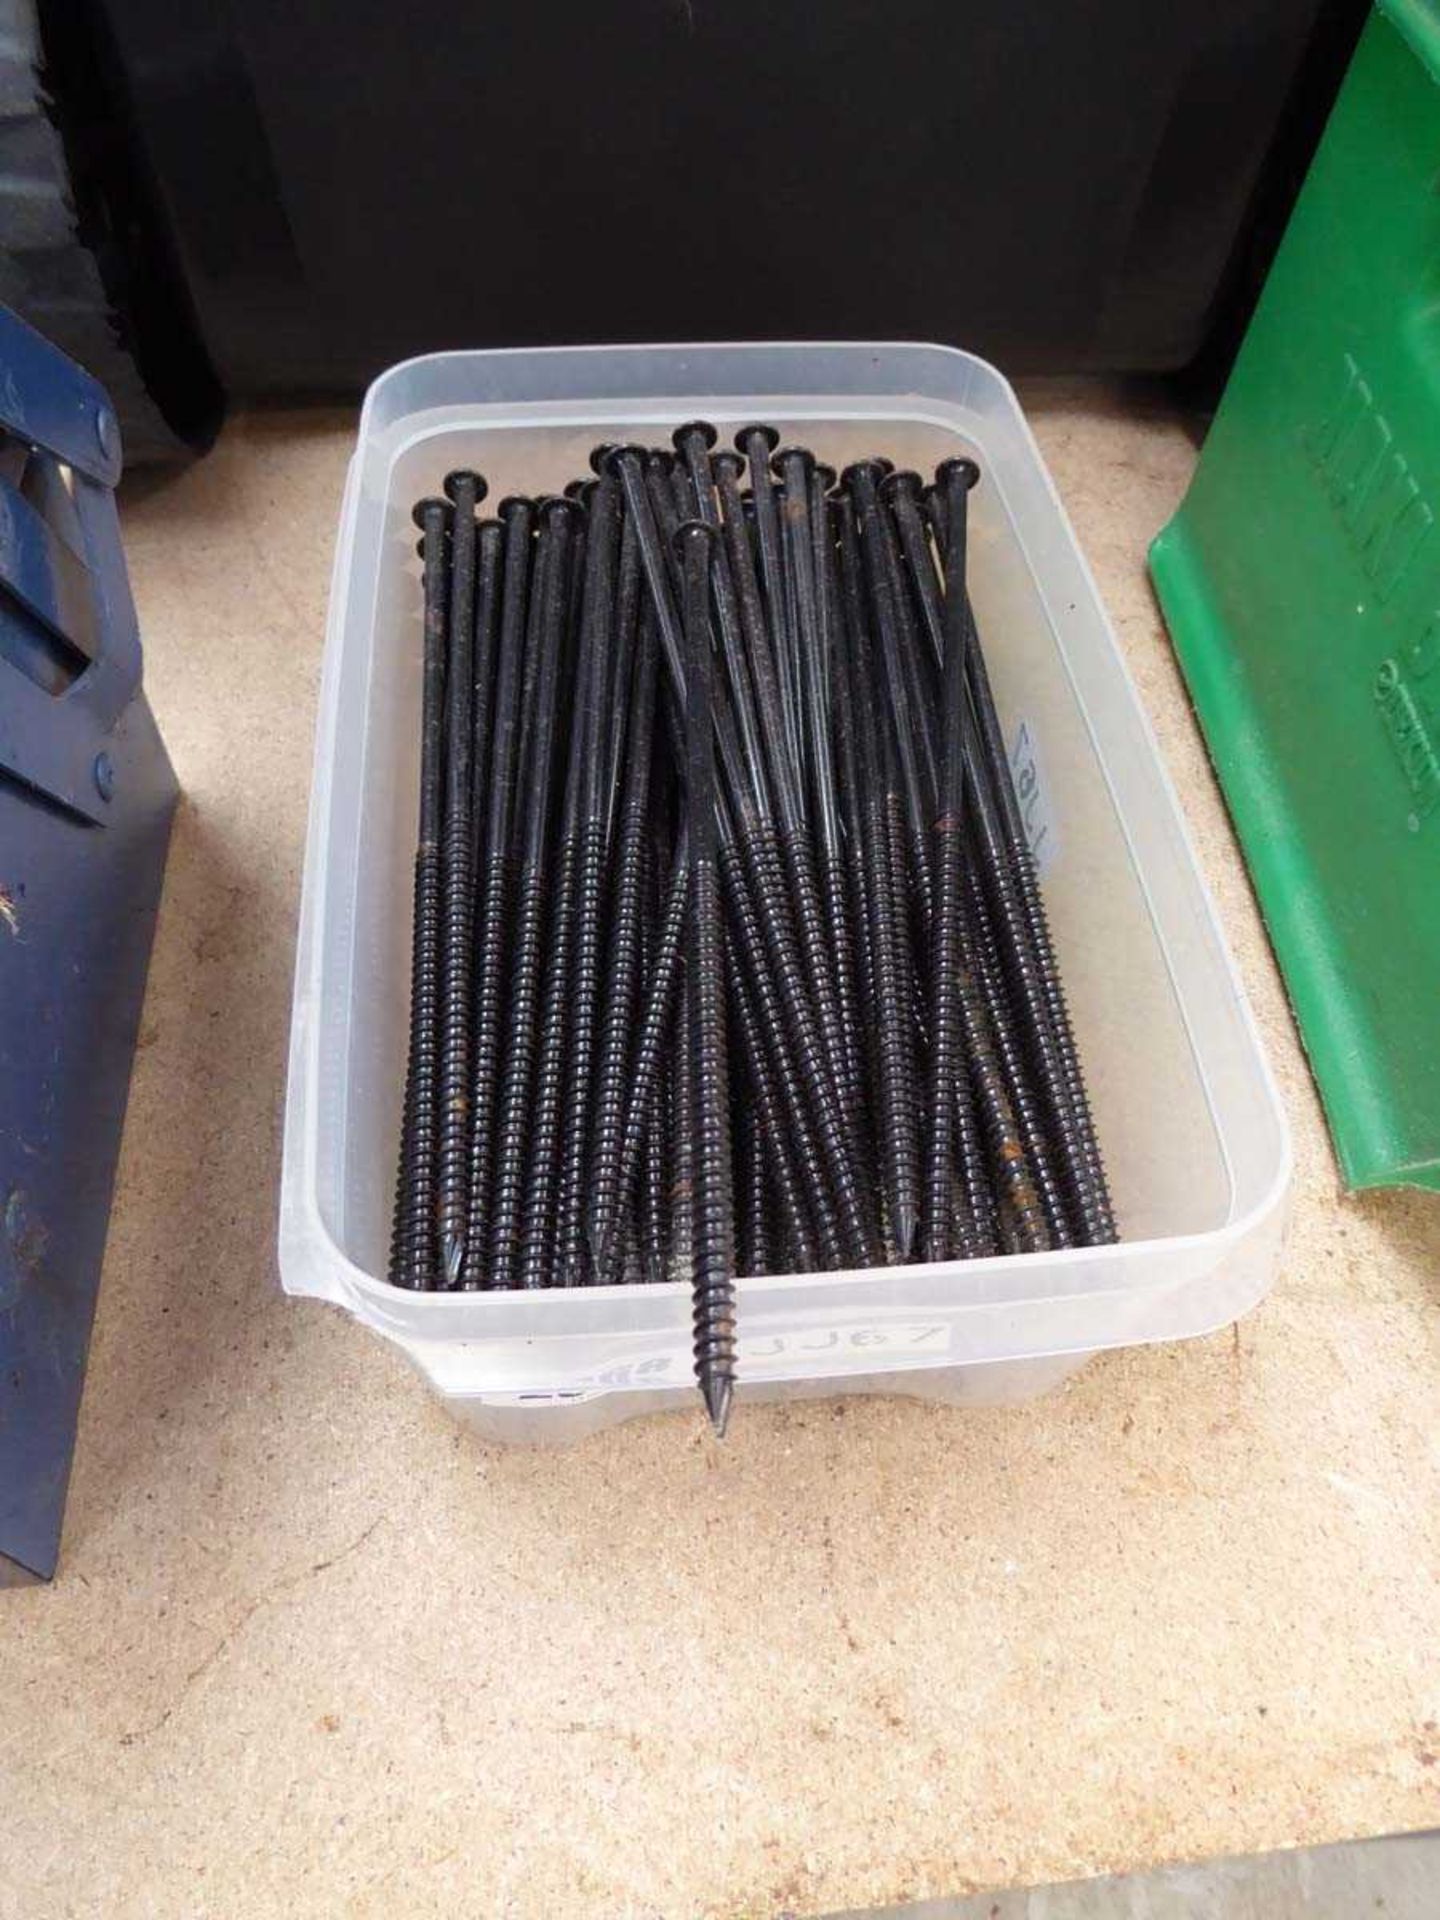 Tub containing 8" long black screws